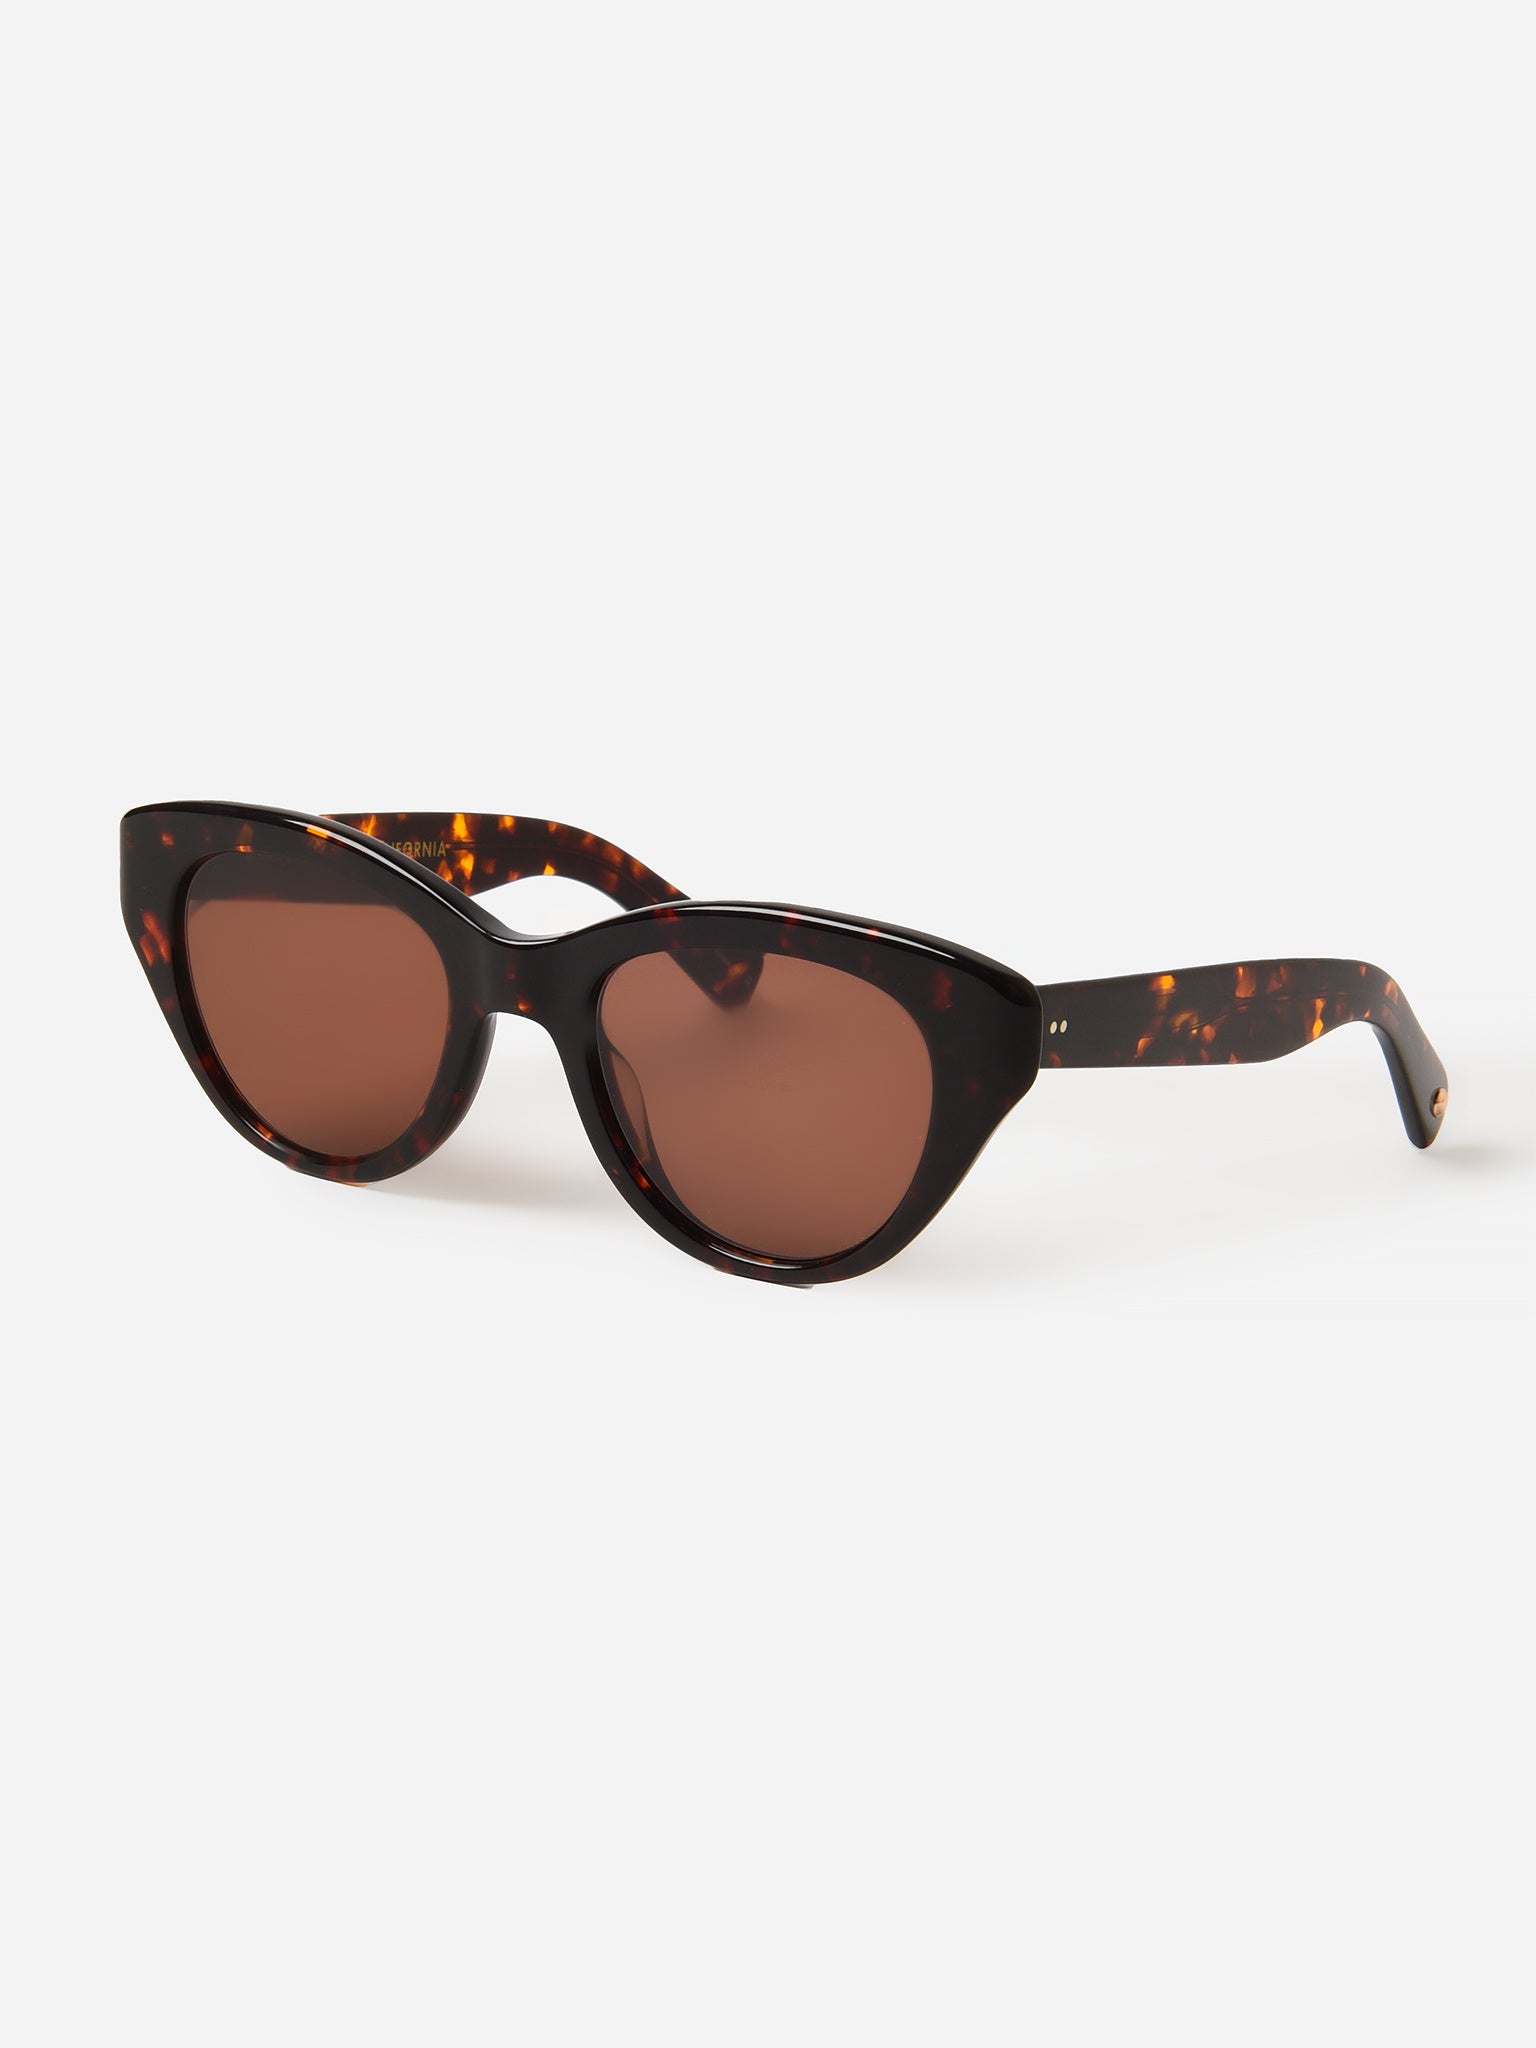 BRAND NEW DIOR CATSTYLEDIOR 1 8072K SUNGLASSES | Dior so real sunglasses,  Round mirrored sunglasses, Sunglasses